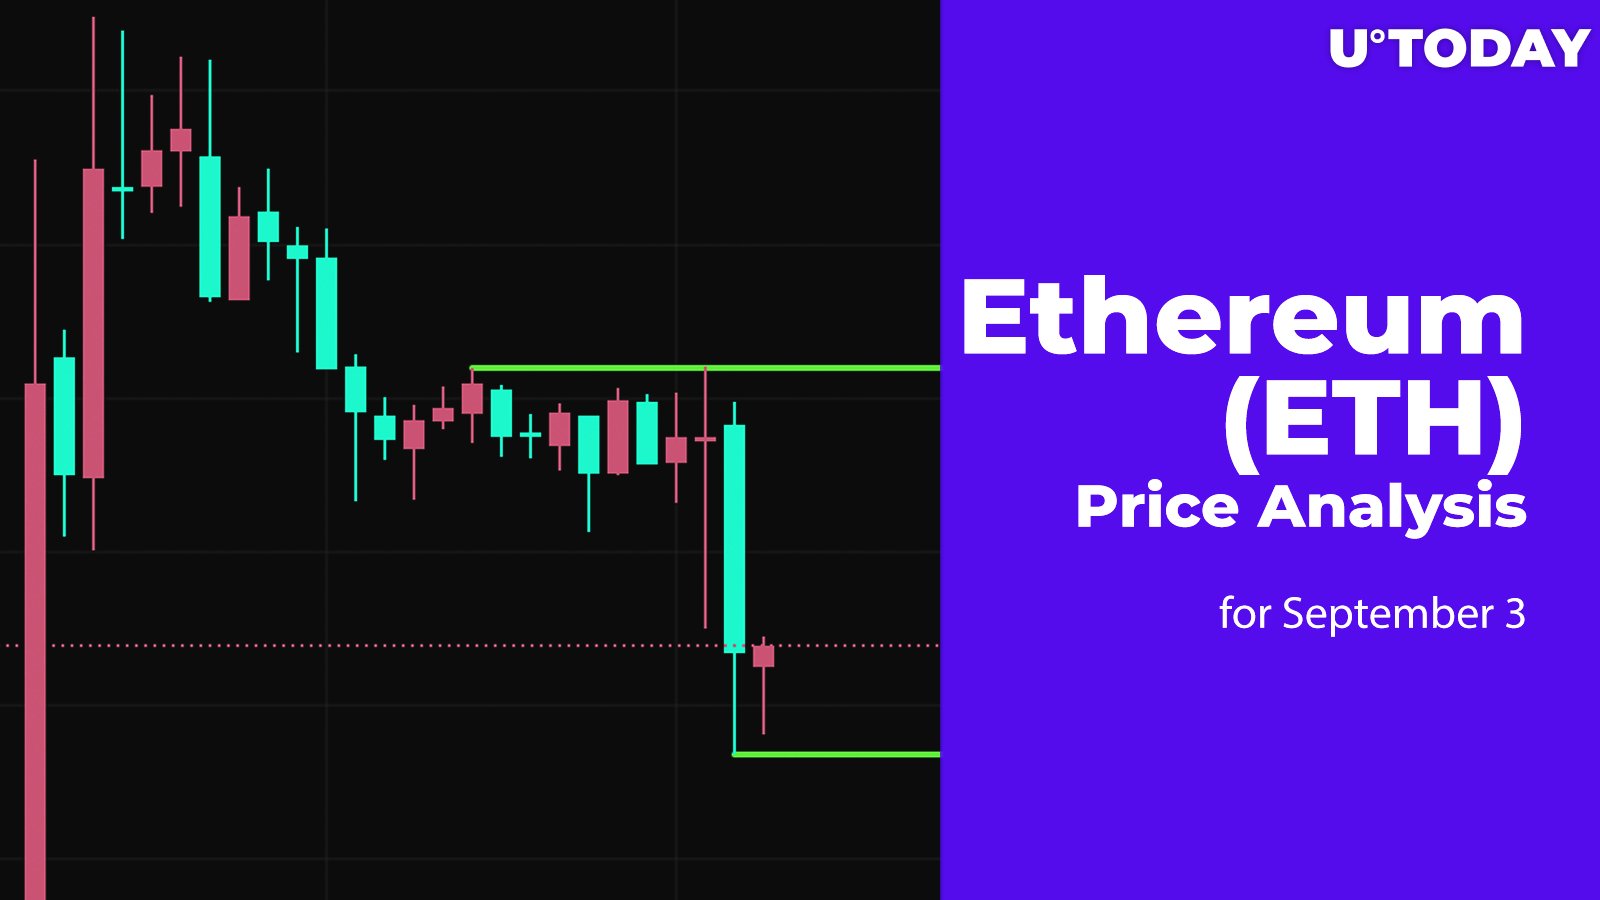 Ethereum (ETH) Price Analysis for September 3